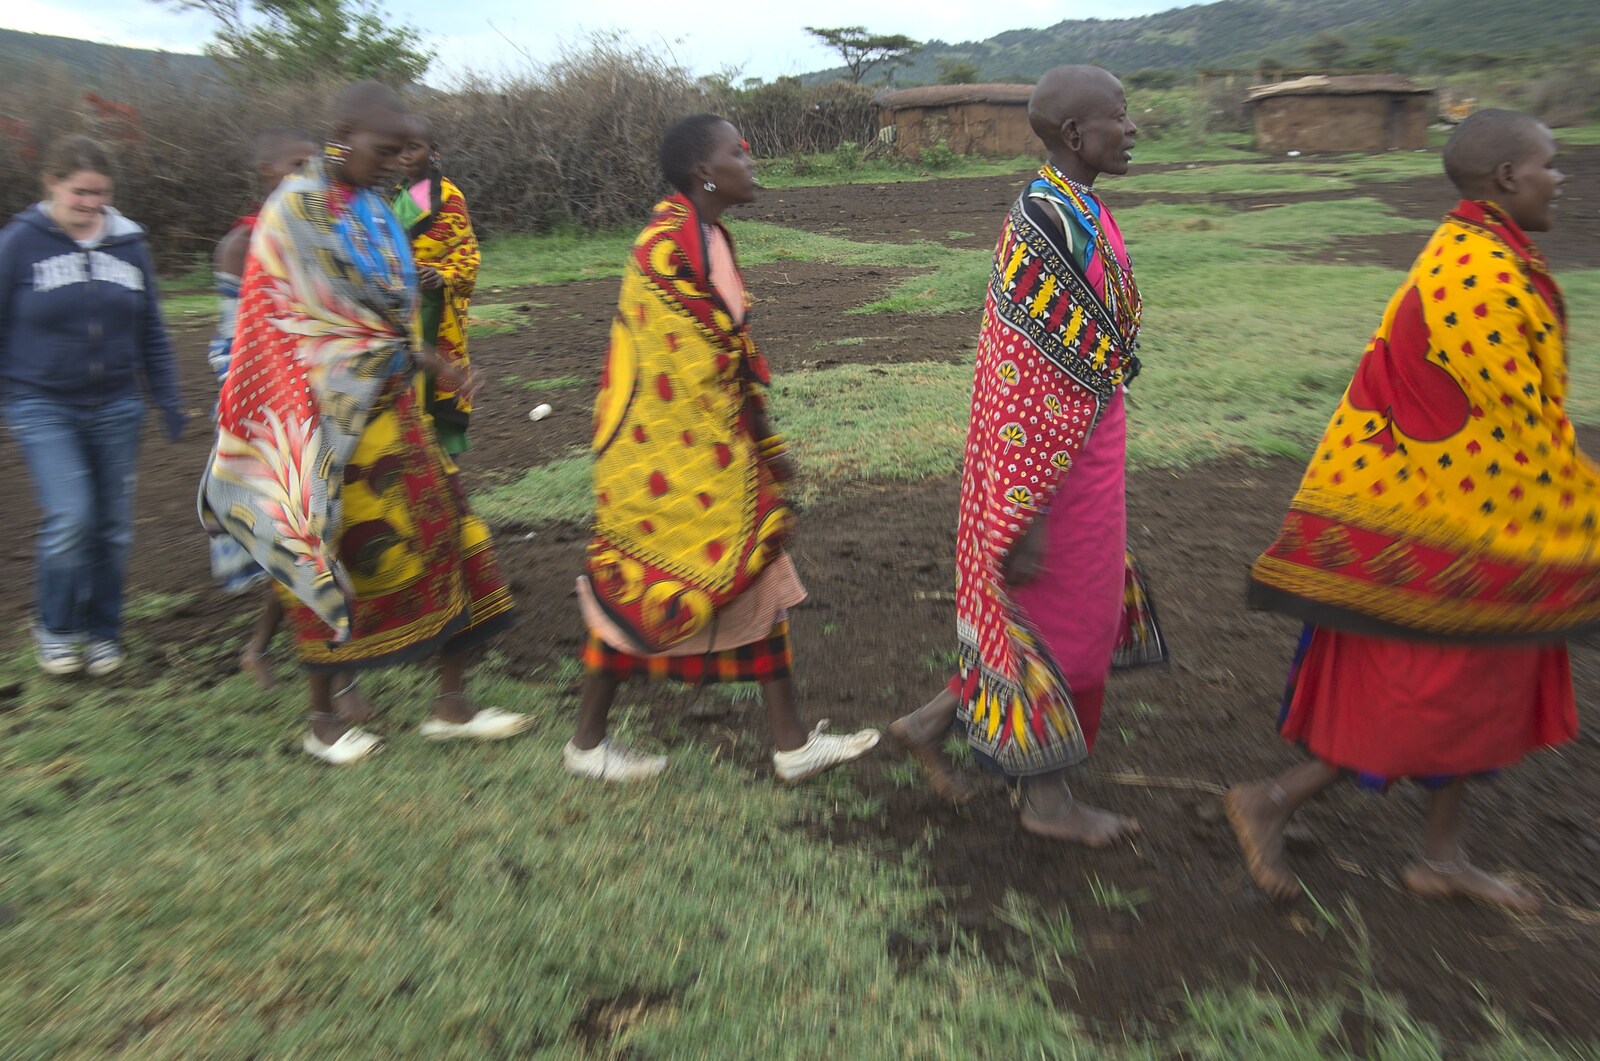 Maasai Mara Safari and a Maasai Village, Ololaimutia, Kenya - 5th November 2010: Colourful Maasai women